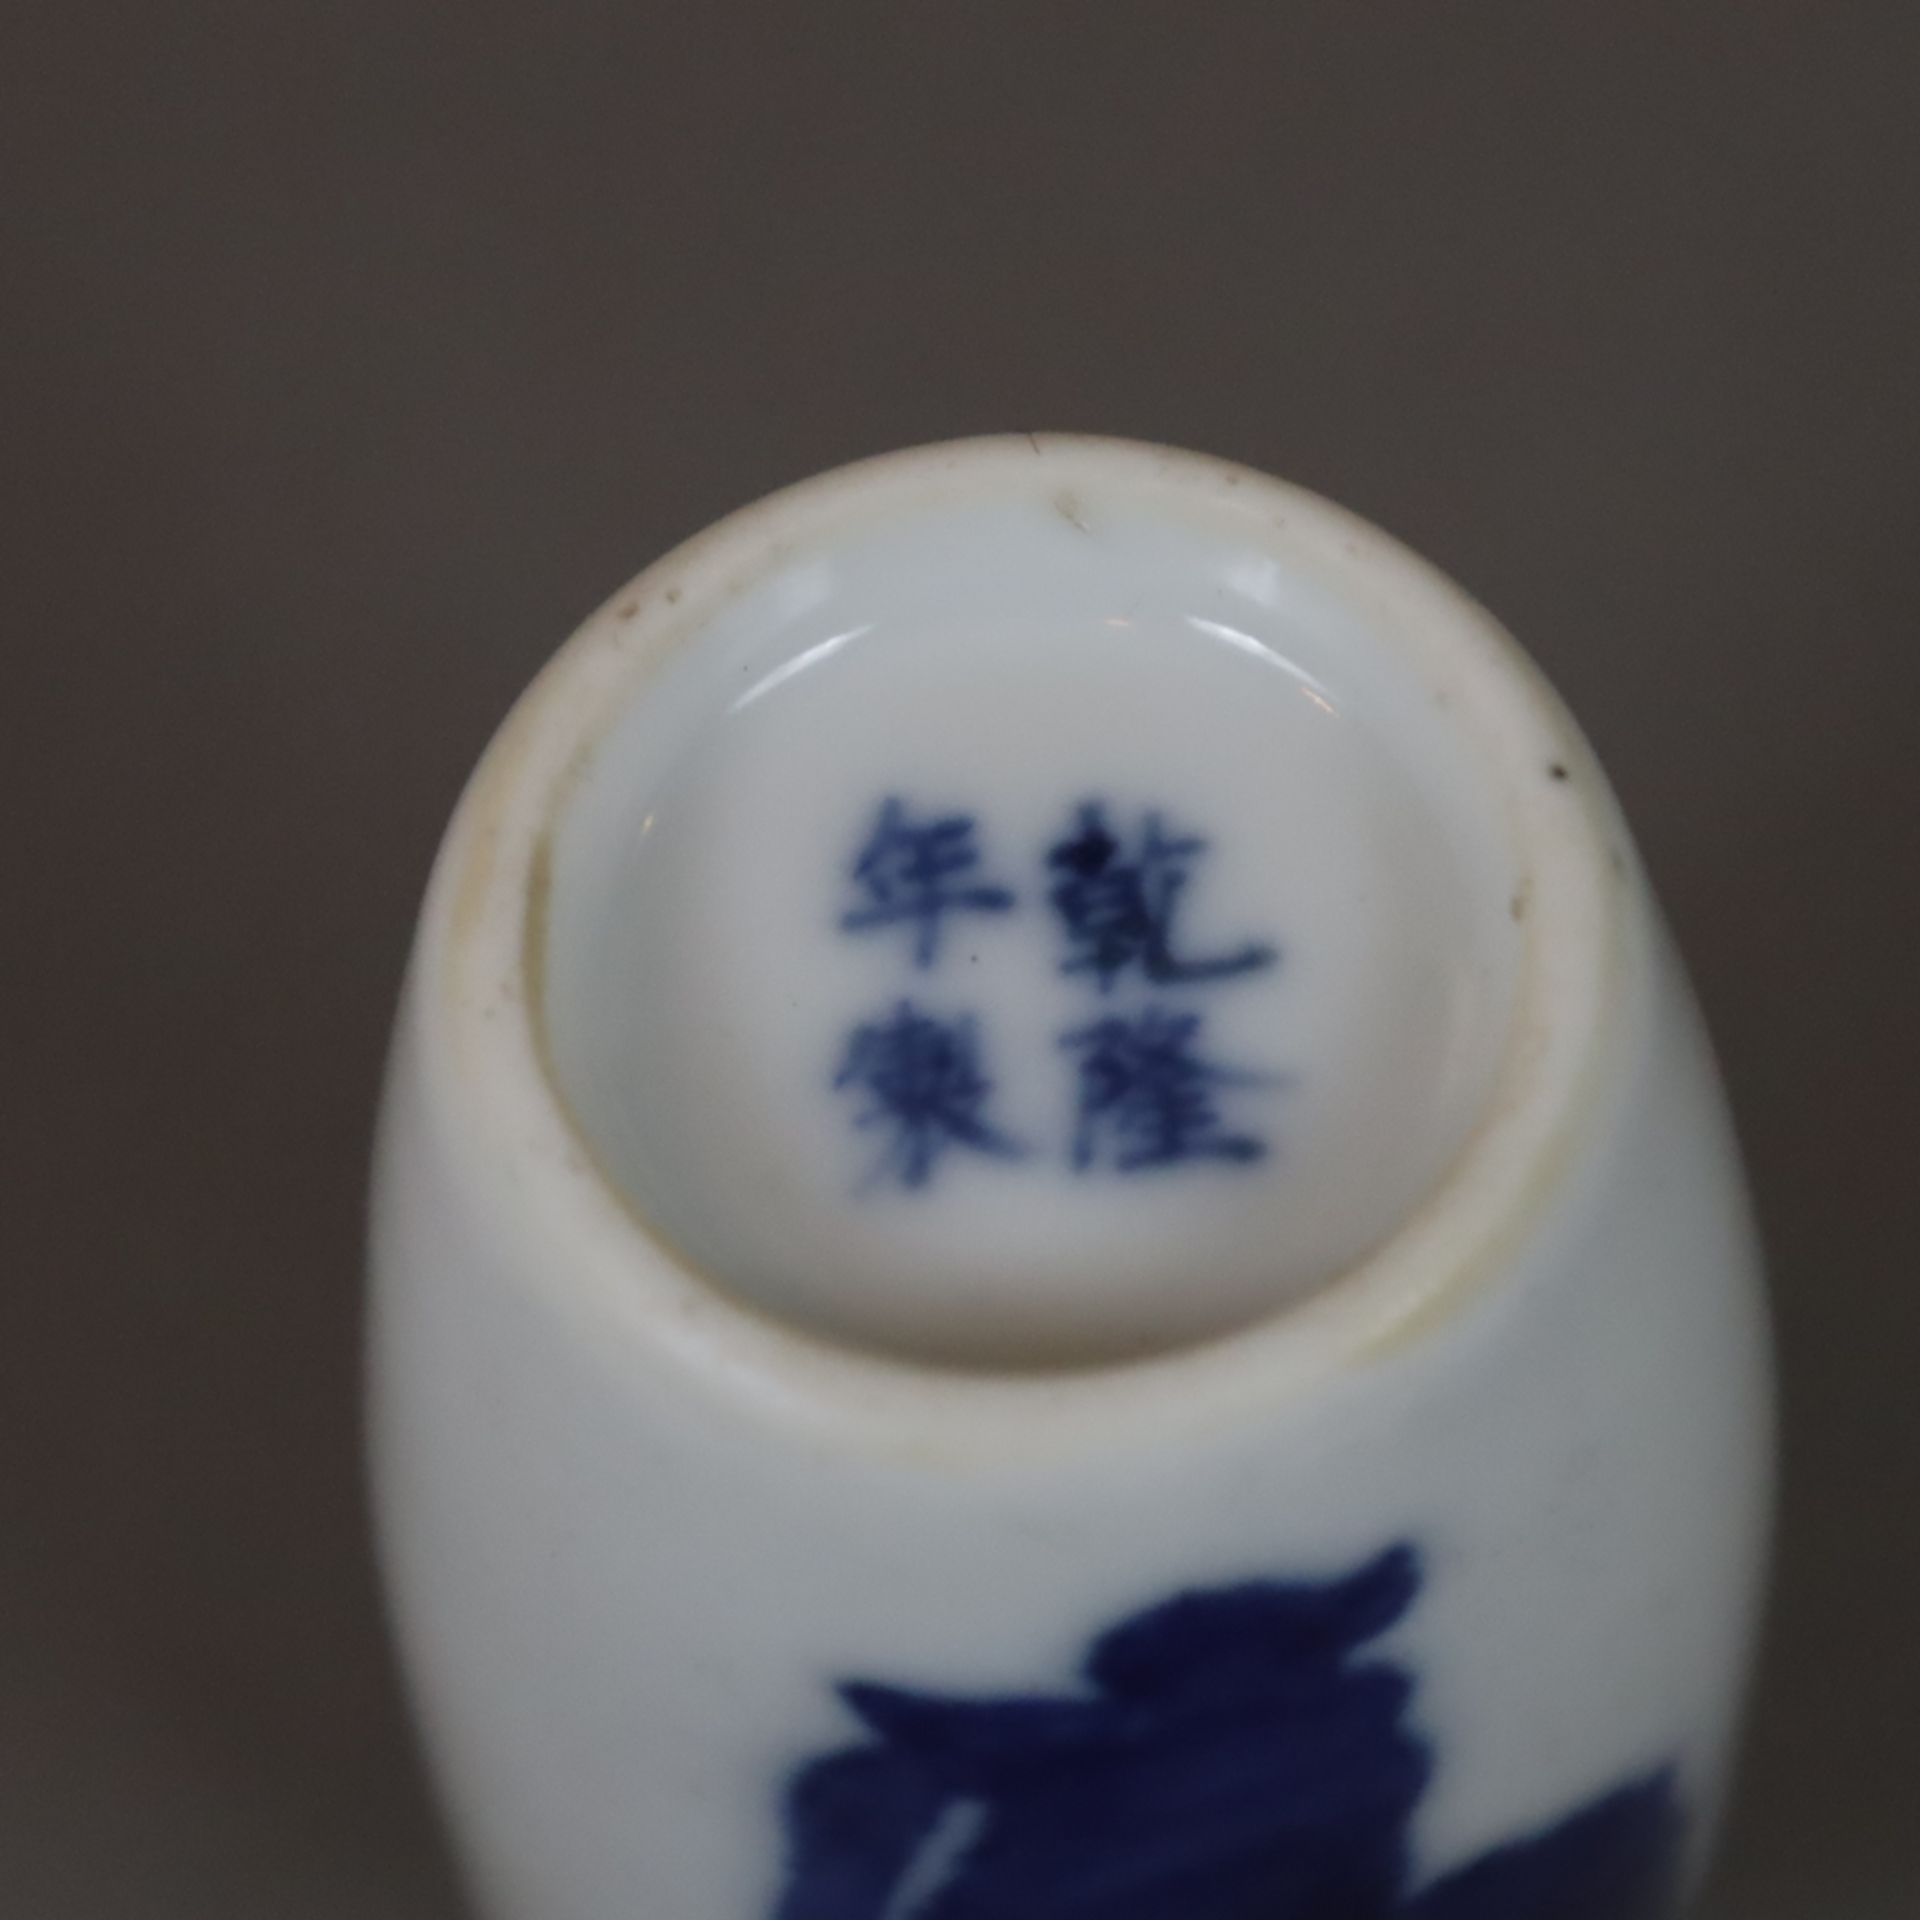 Snuffbottle - Porzellan in Unterglasurblau bemalt mit Dämonen-Bezwinger Zhong Kui, im Boden "Qianlo - Image 6 of 6